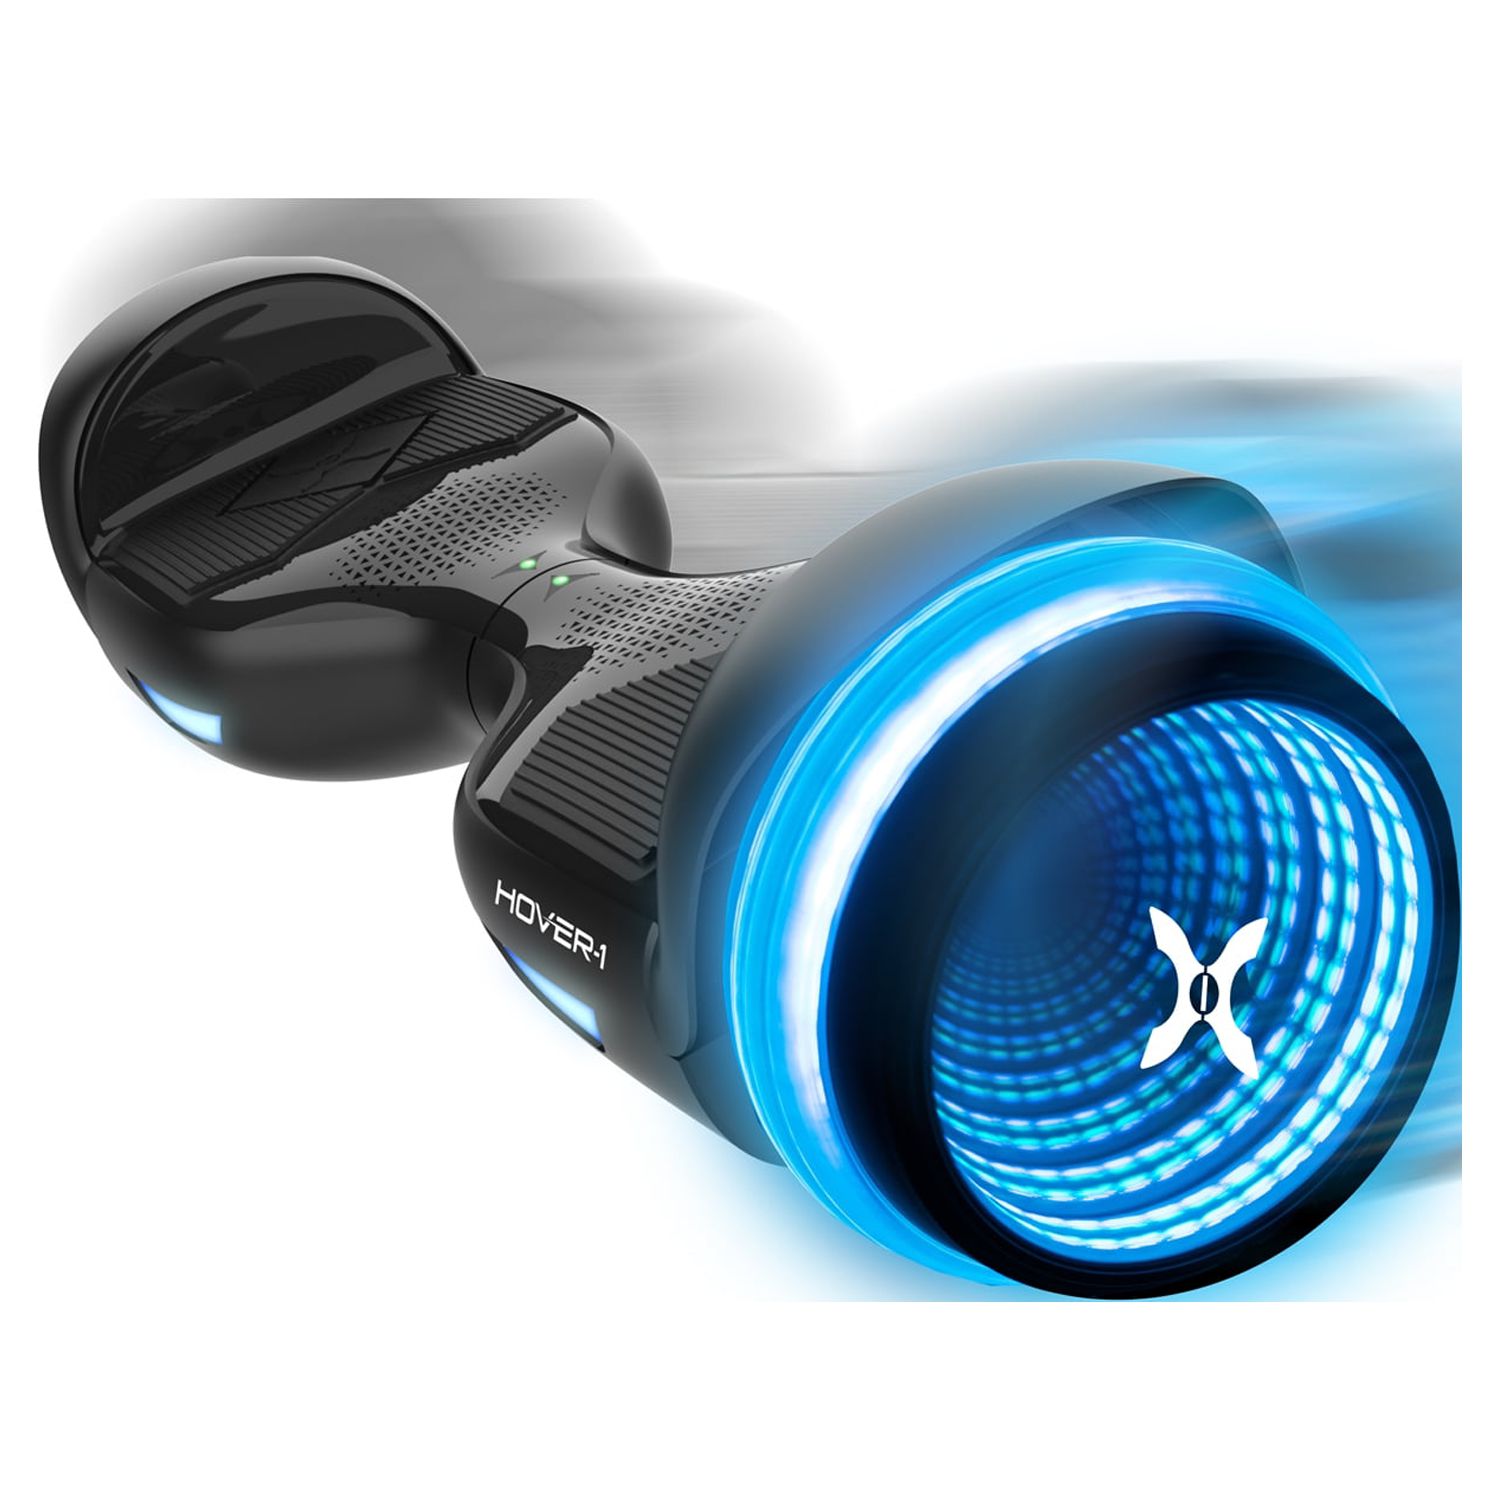 Hover-1 i-200 Hoverboard for Children, Bluetooth Speaker & LED Lights, 7 mph Max Speed, Black - image 4 of 8